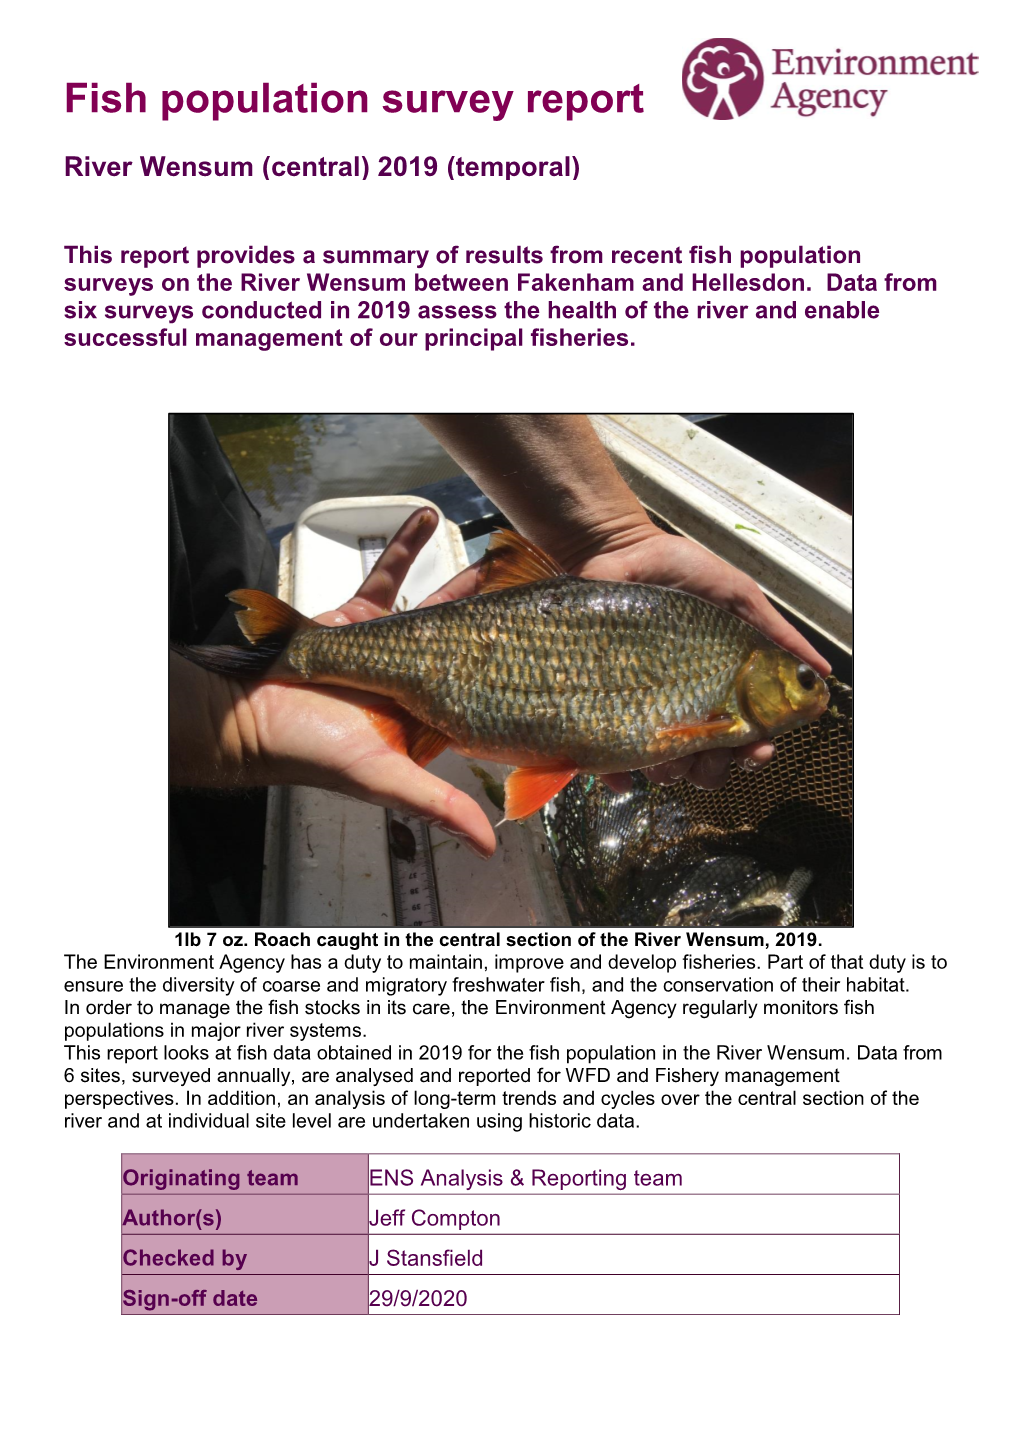 Fish Population Survey Report